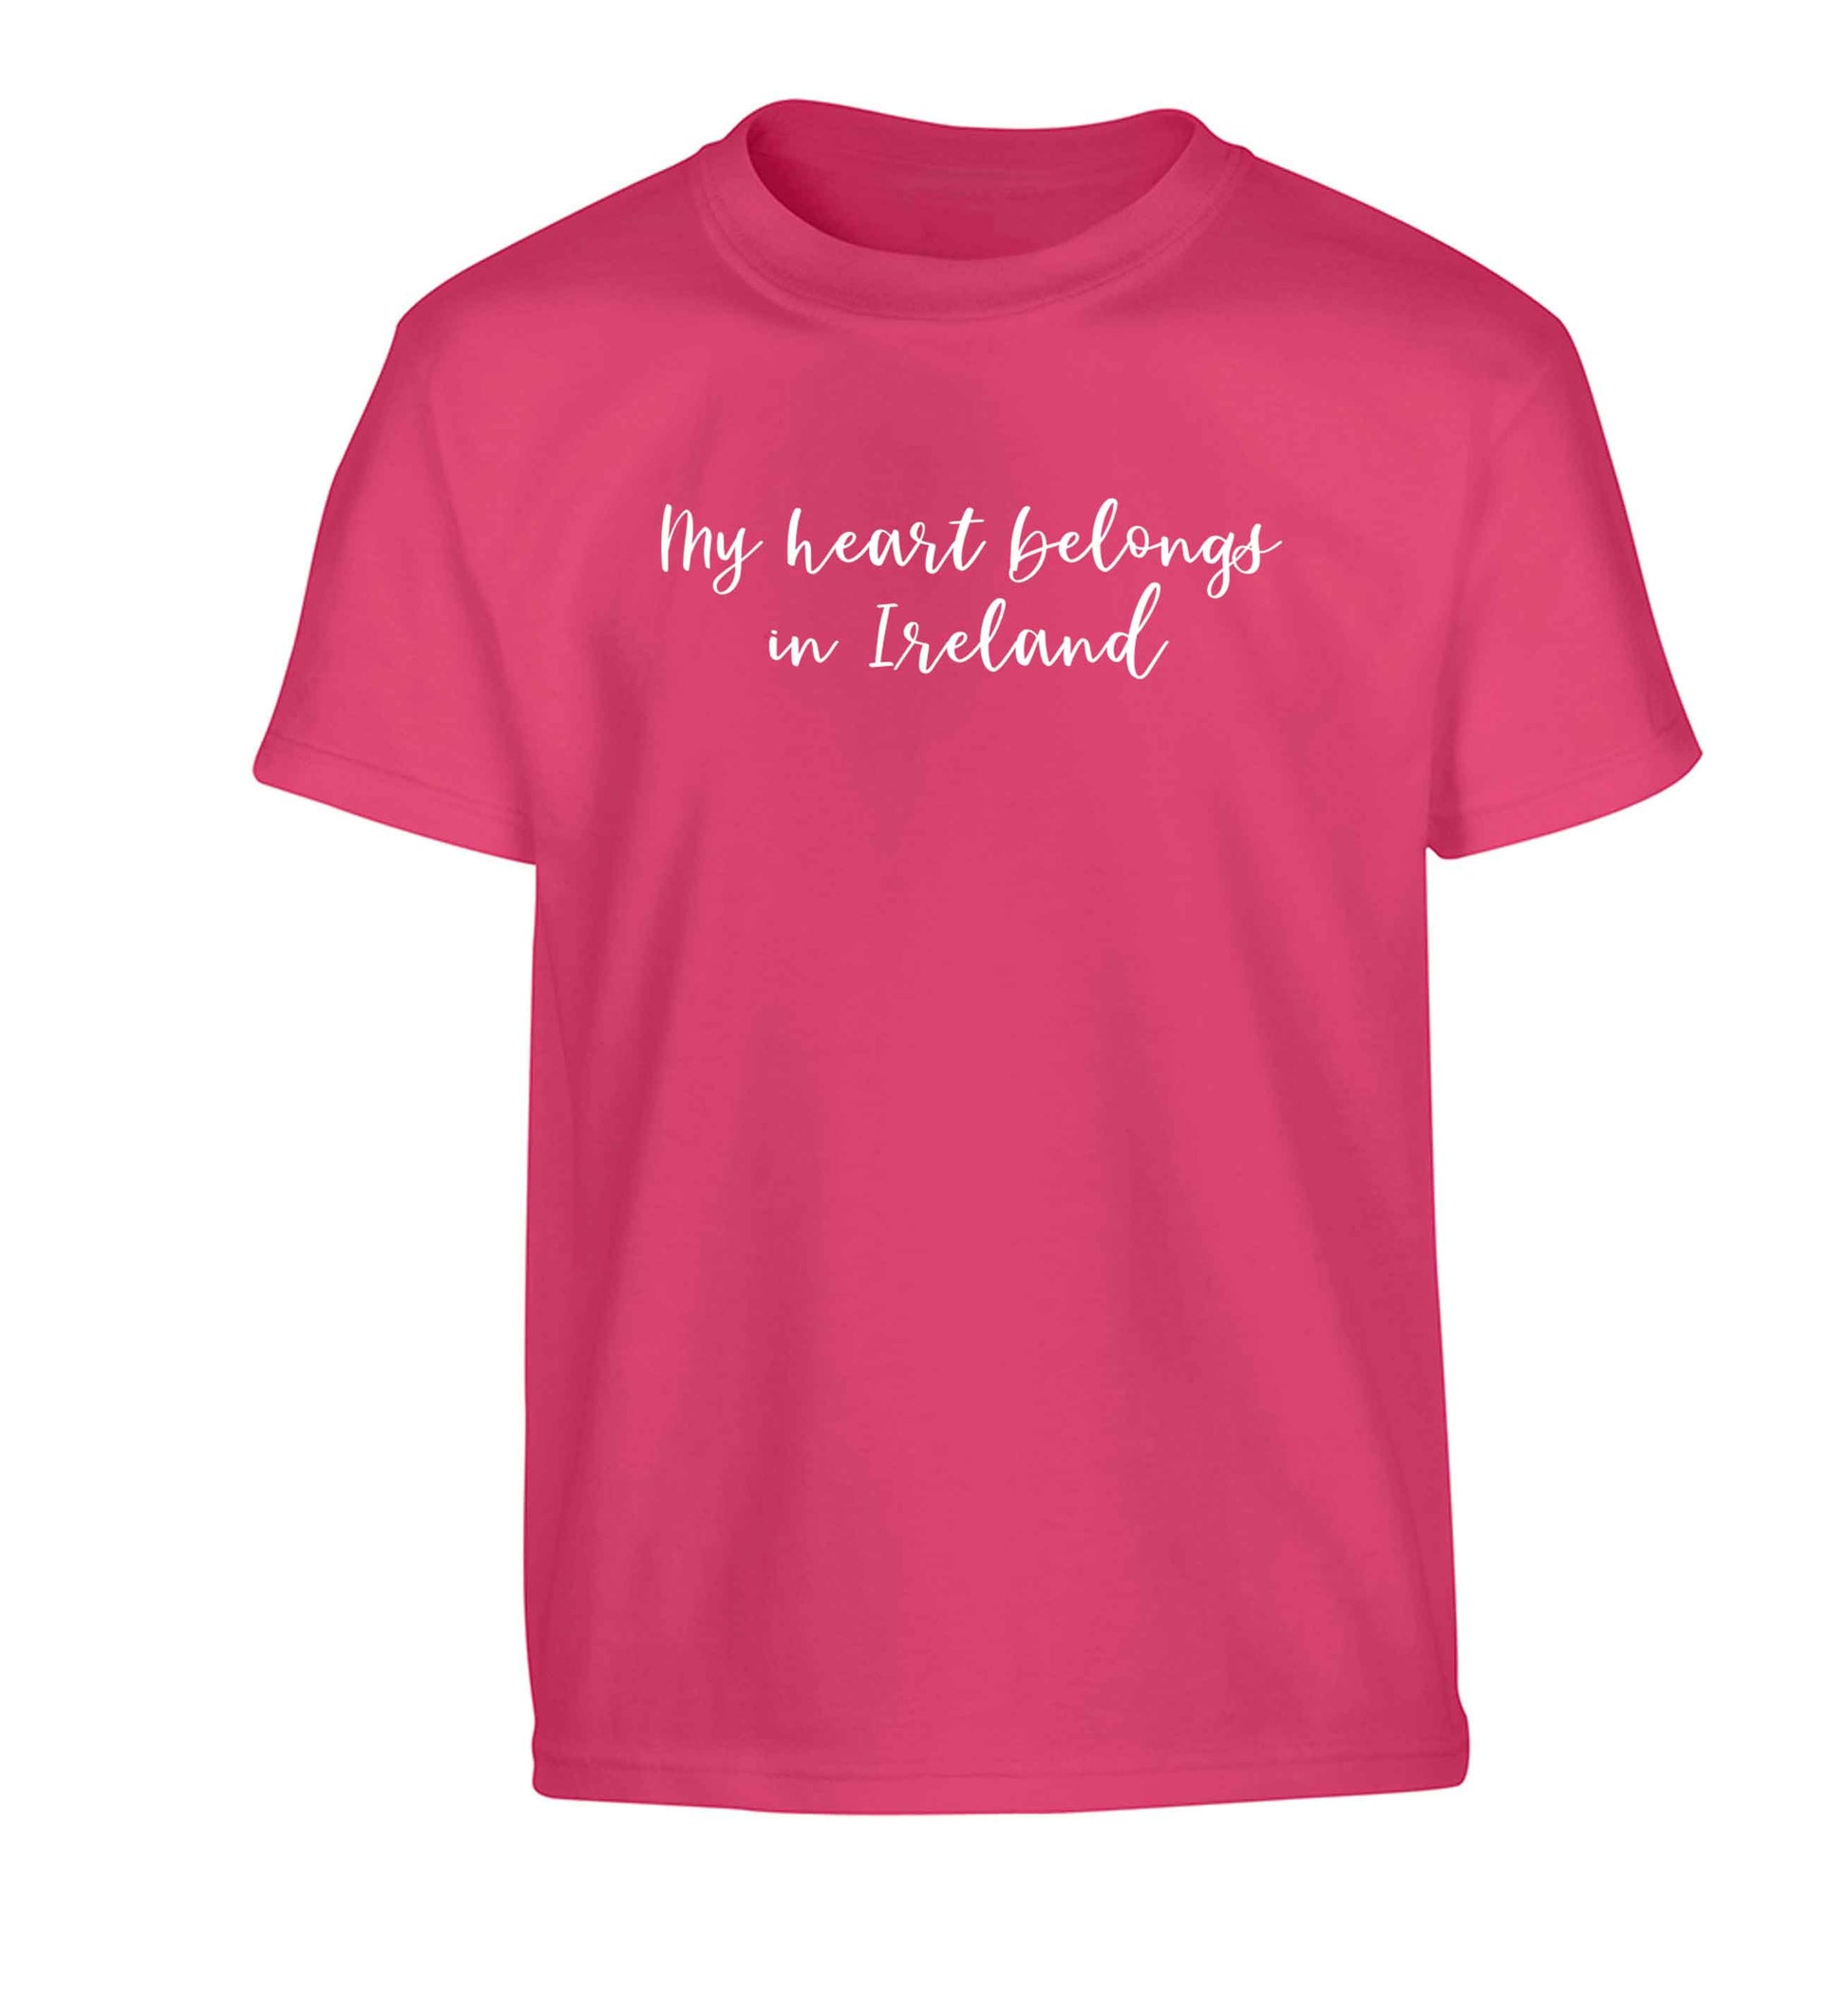 My heart belongs in Ireland Children's pink Tshirt 12-13 Years